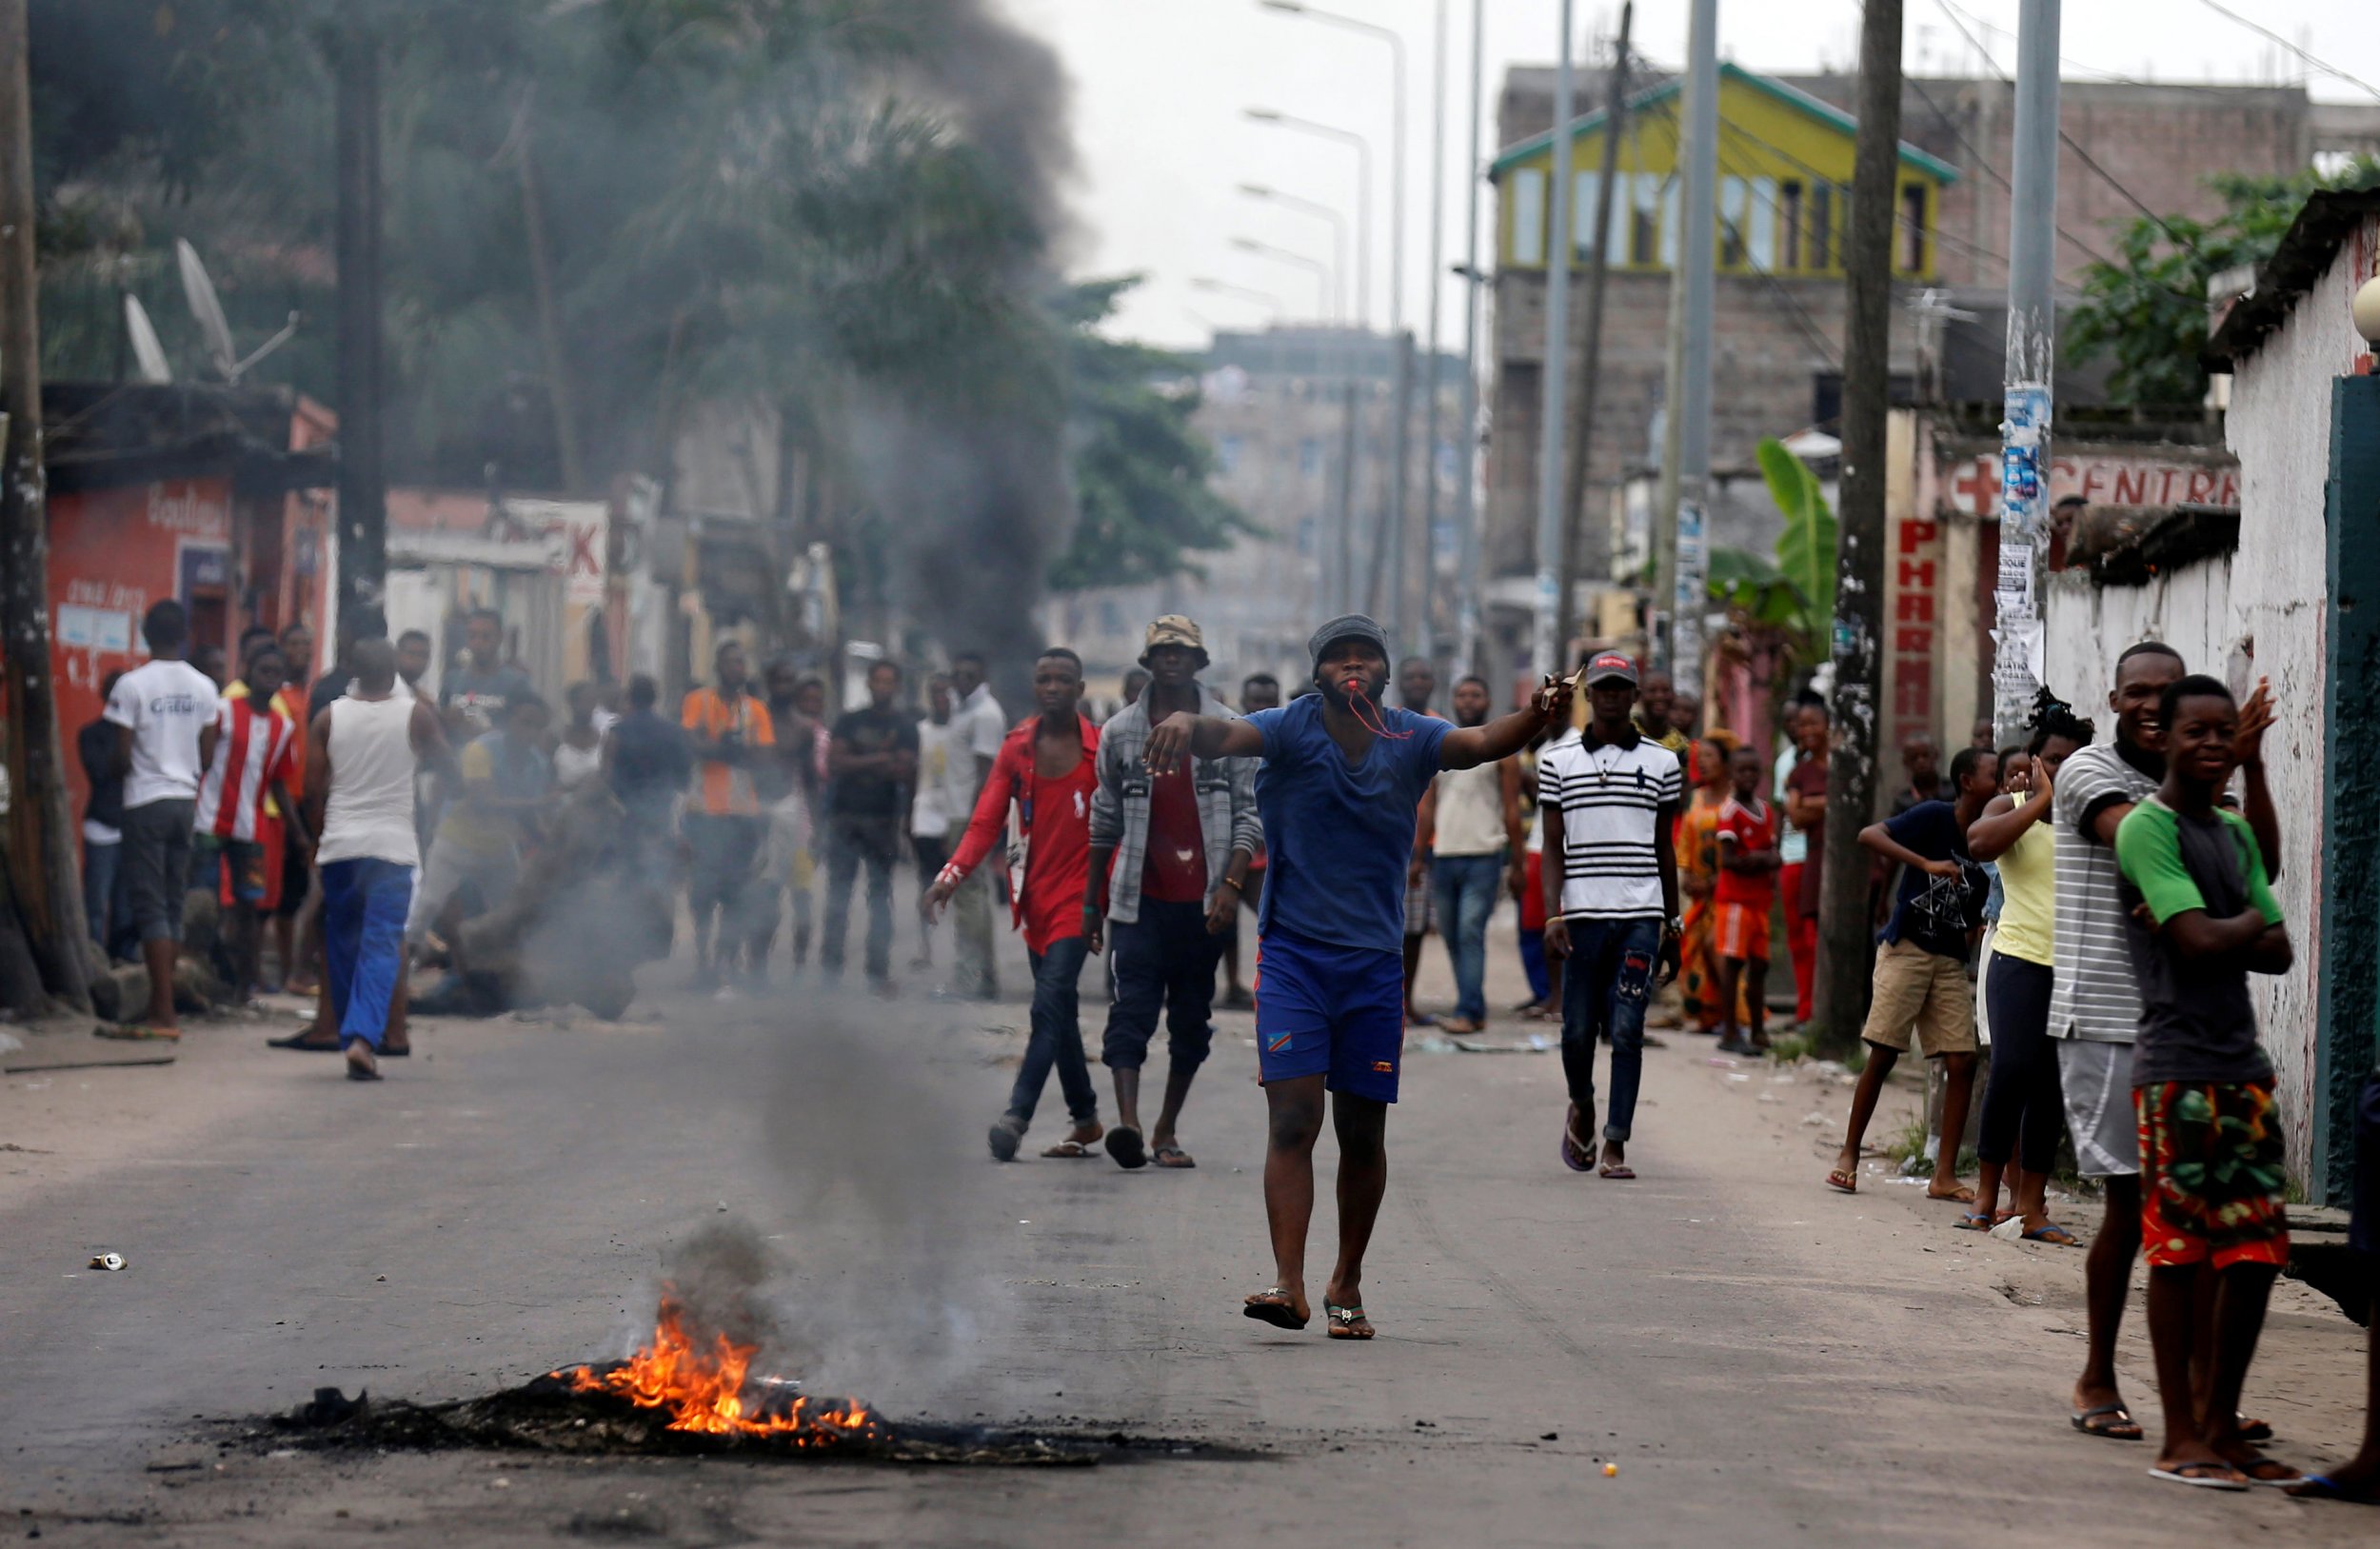 Congo protest